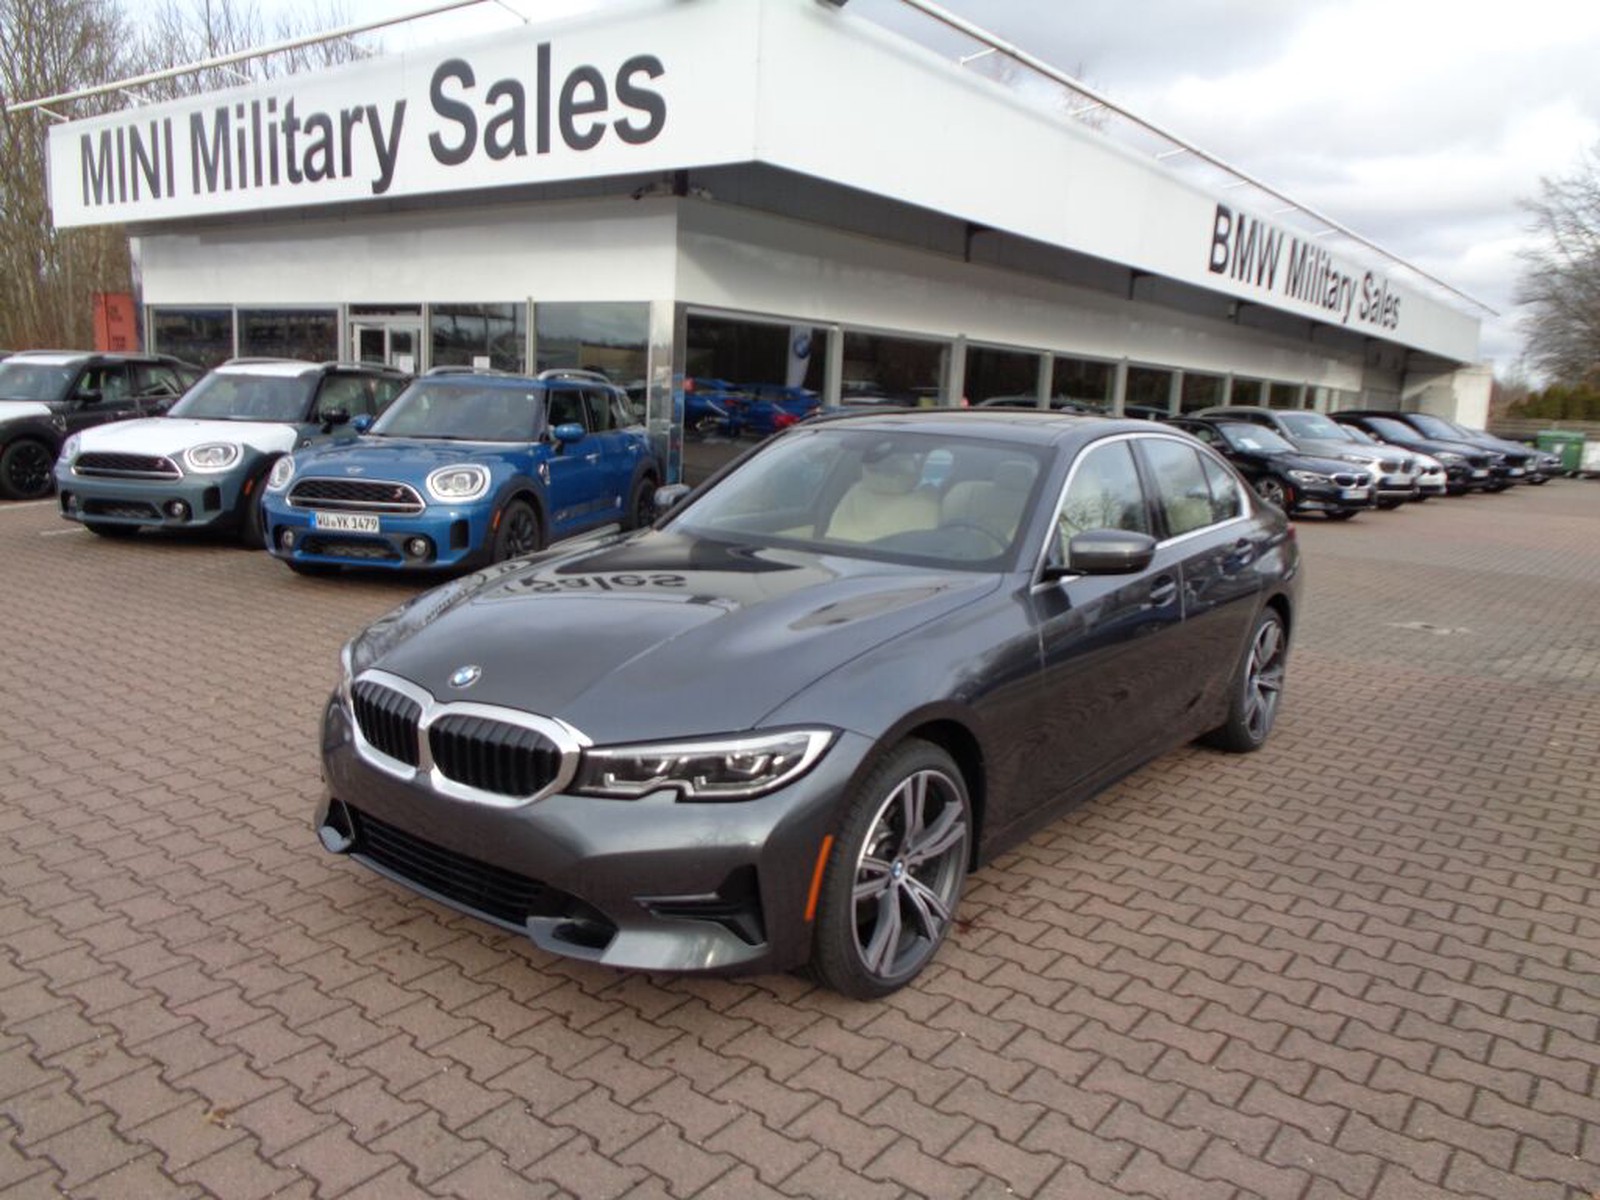 BMW 330 i xDrive Sedan - Tax Free Military Sales in Kaiserslautern